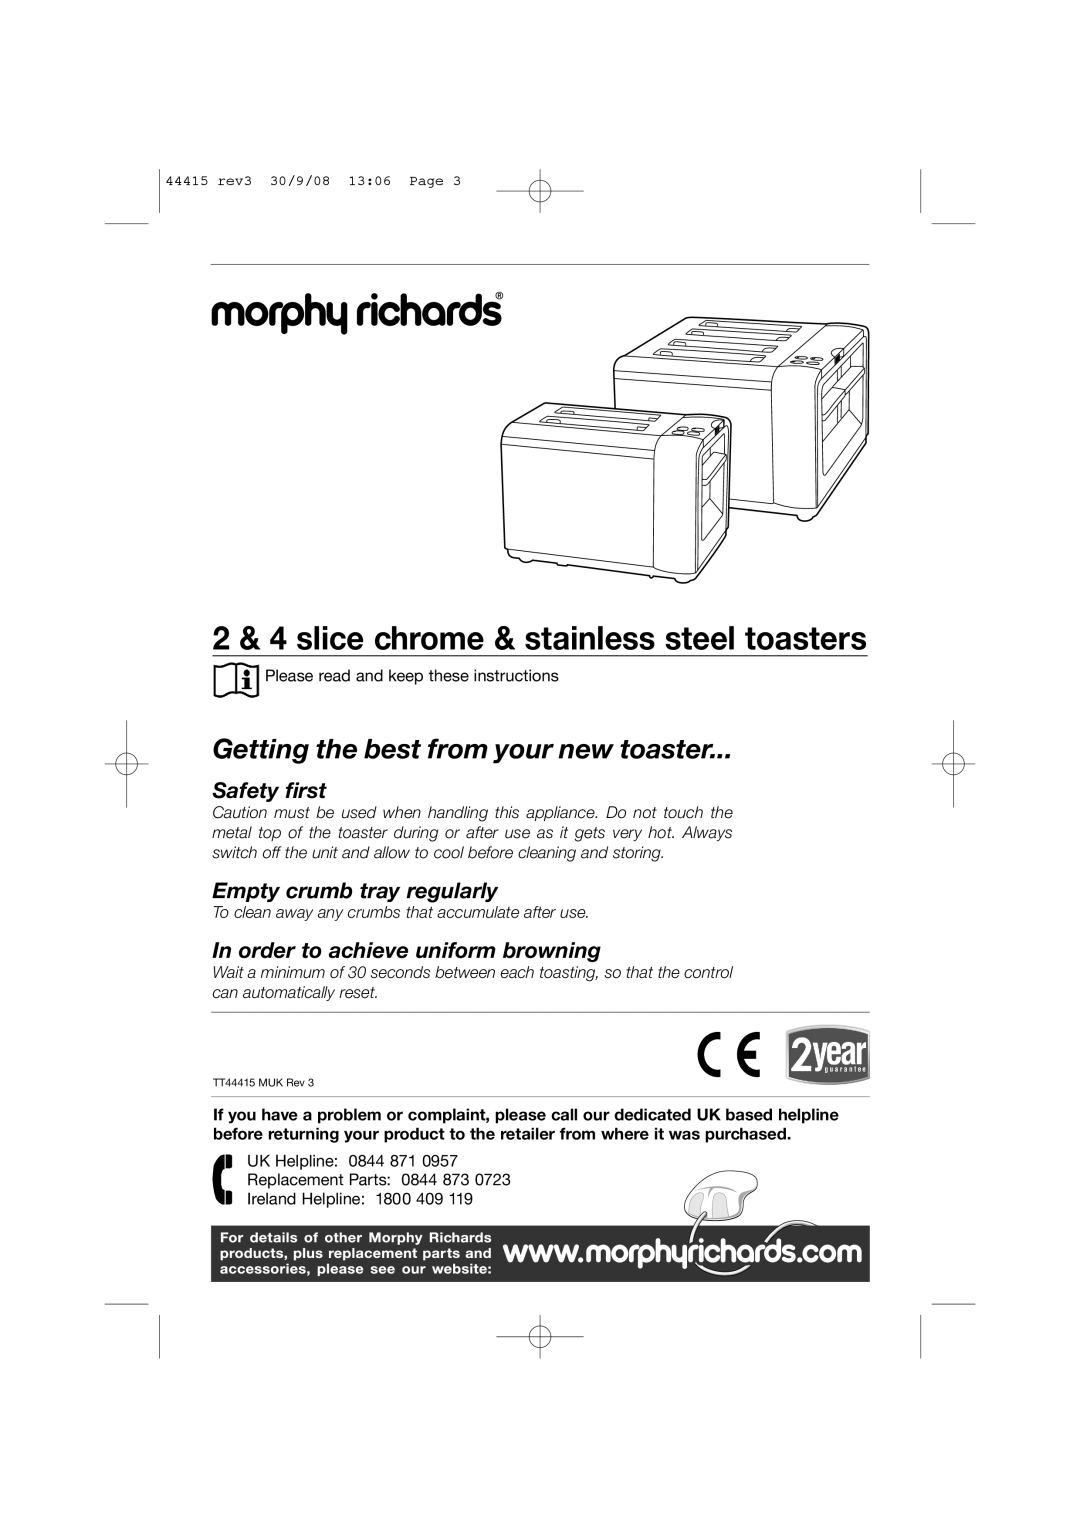 Morphy Richards 2 & 4 Slice Chrome & Stainless Steel Toaster manual 2 & 4 slice chrome & stainless steel toasters 